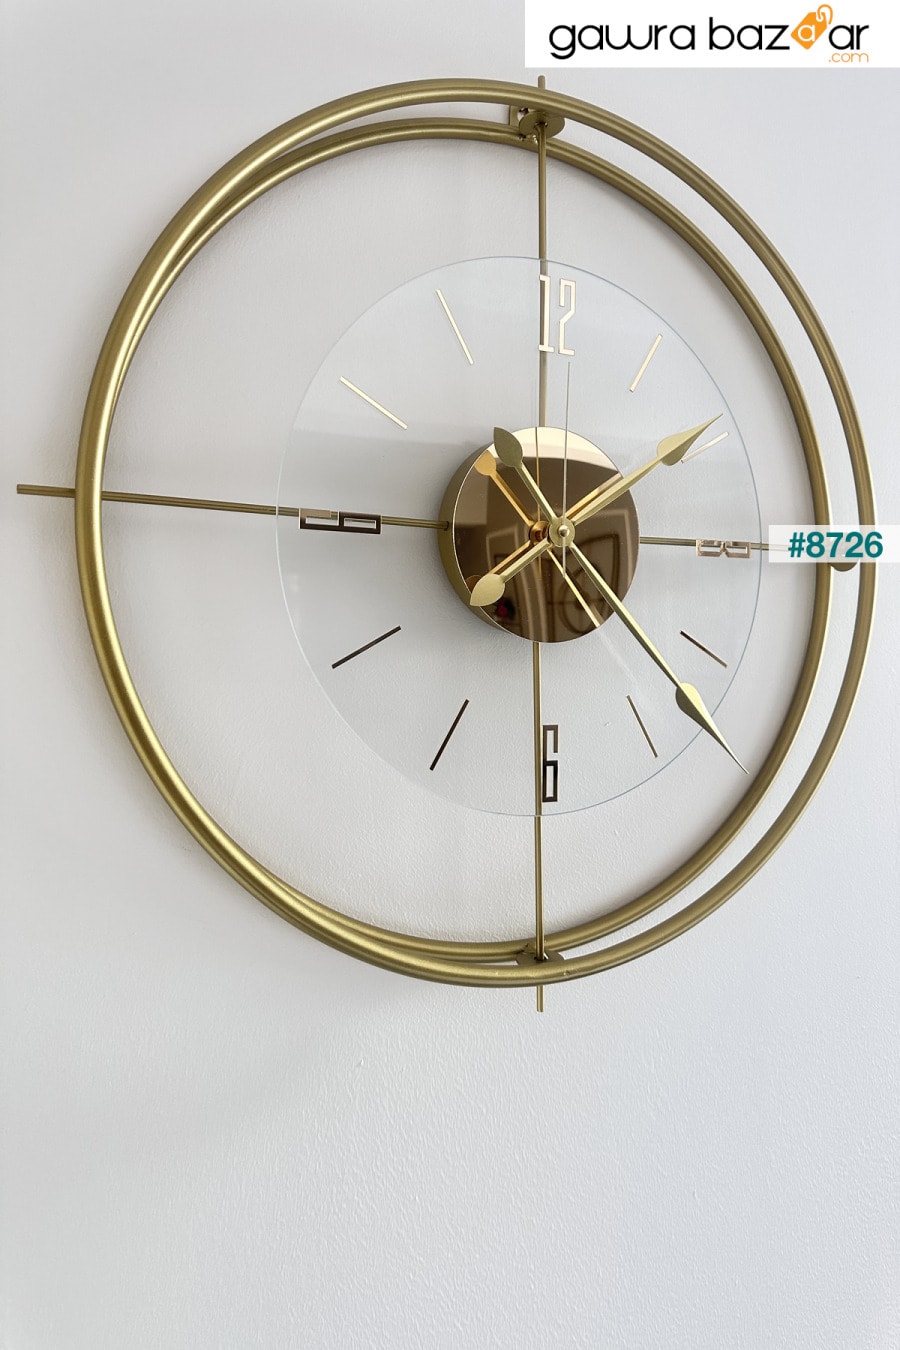 ساعة حائط مودرن جولد ديلوكس زجاج شفاف اسكندنافي 60 سم AGA KONSEPT 1